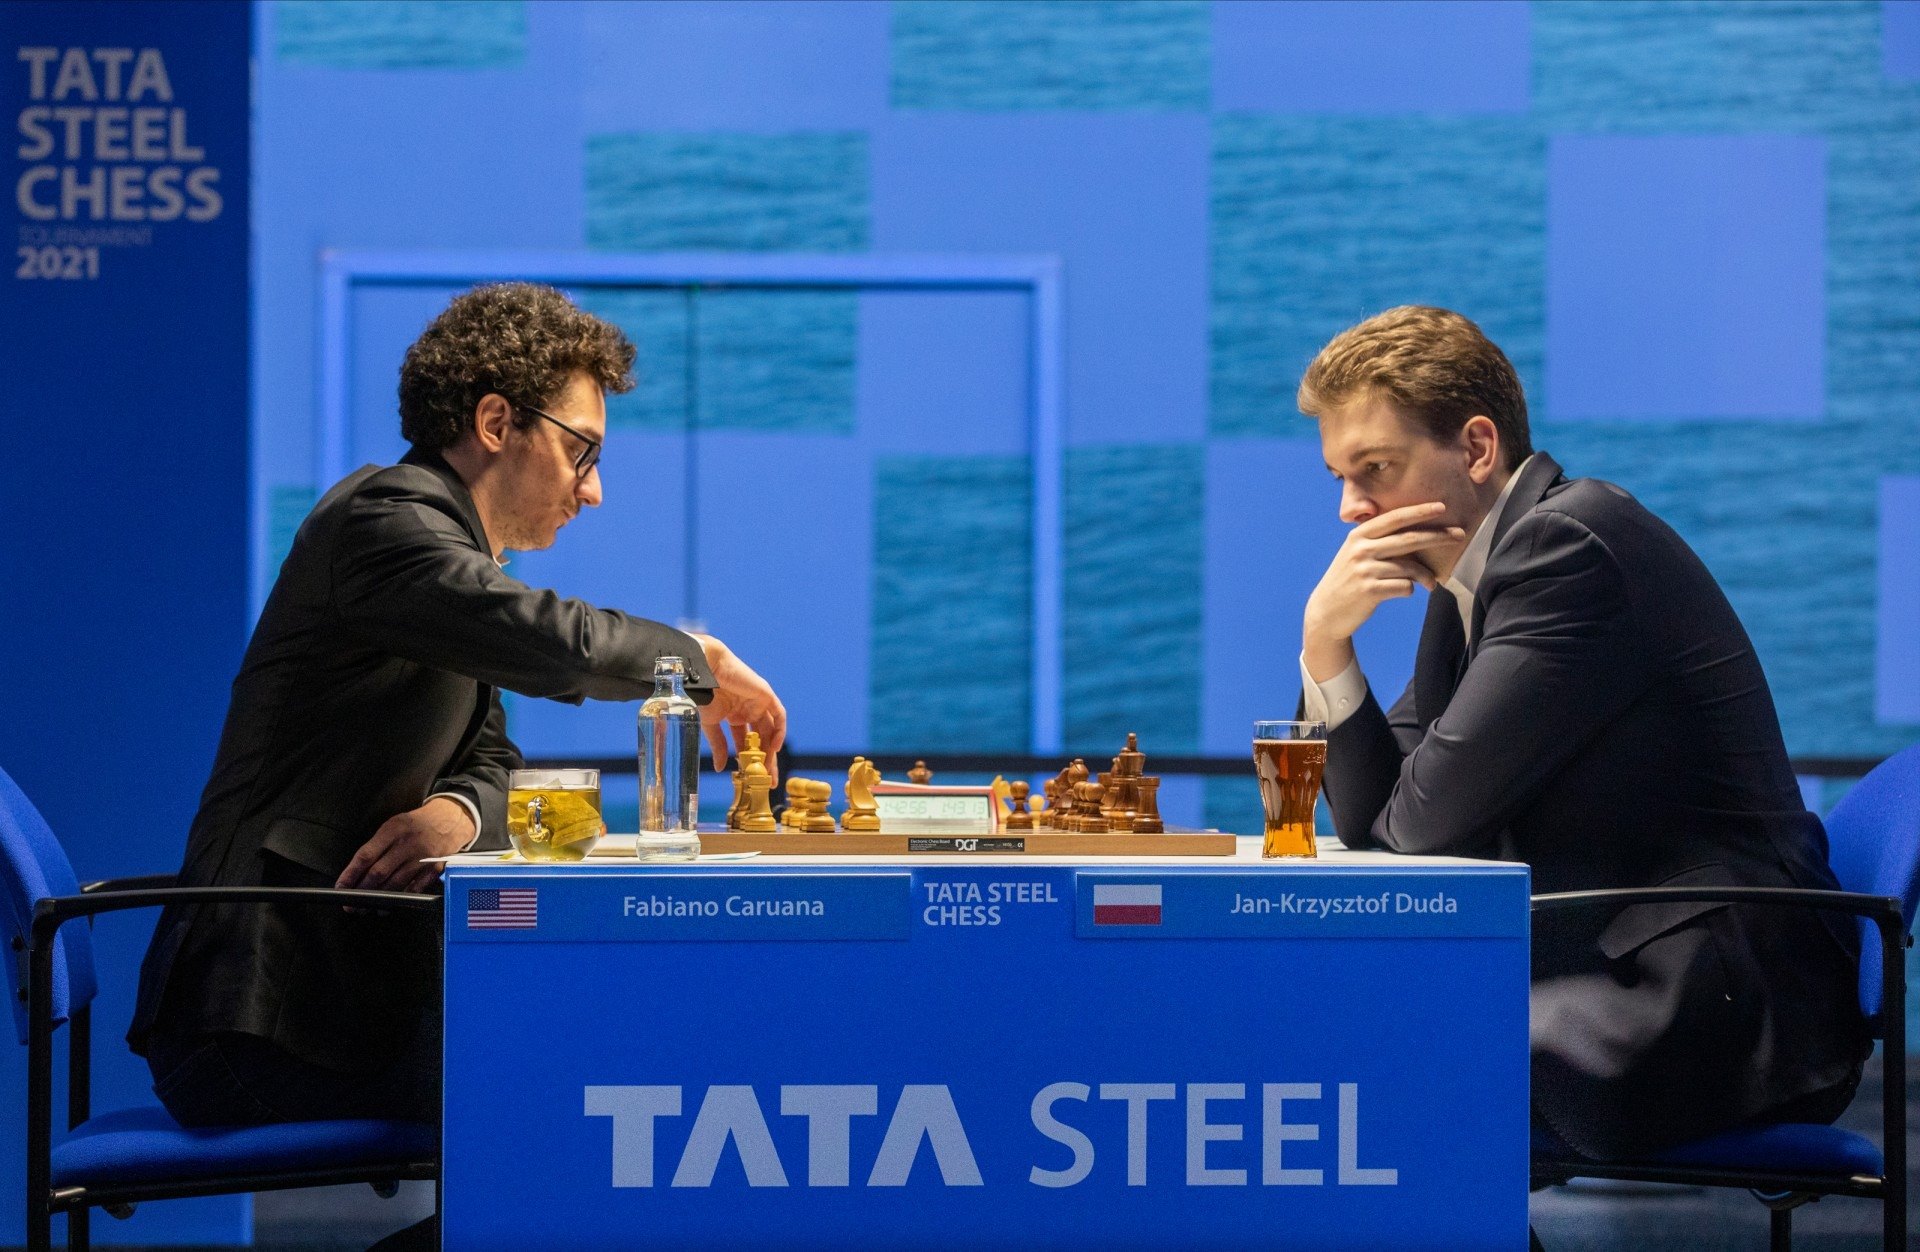 Tata Steel Chess Tournament odds